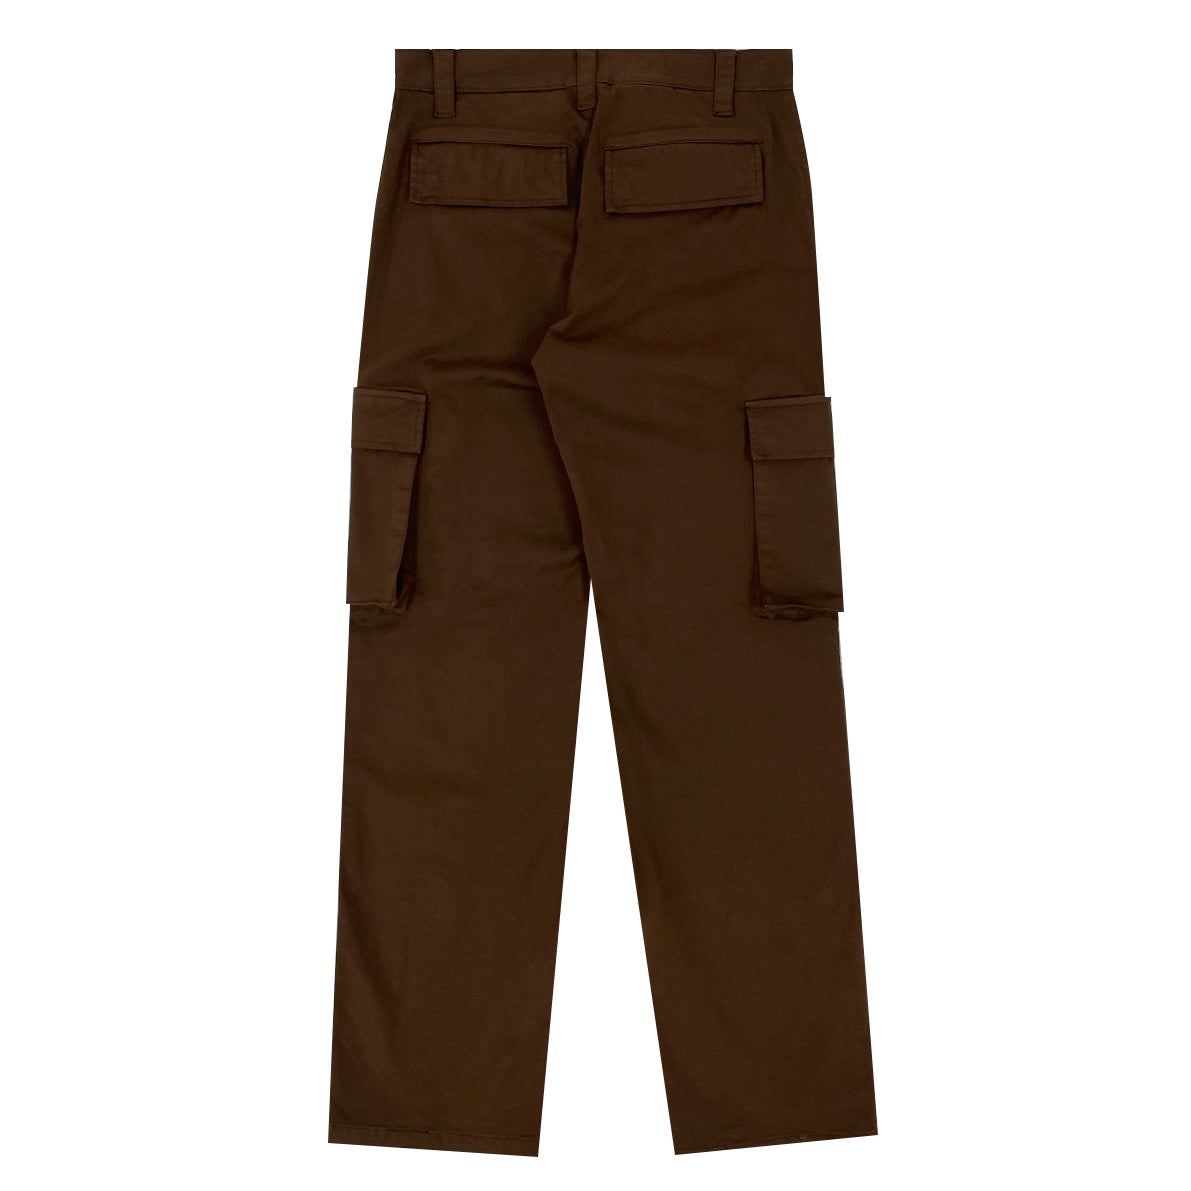 Brown Cargo Pant